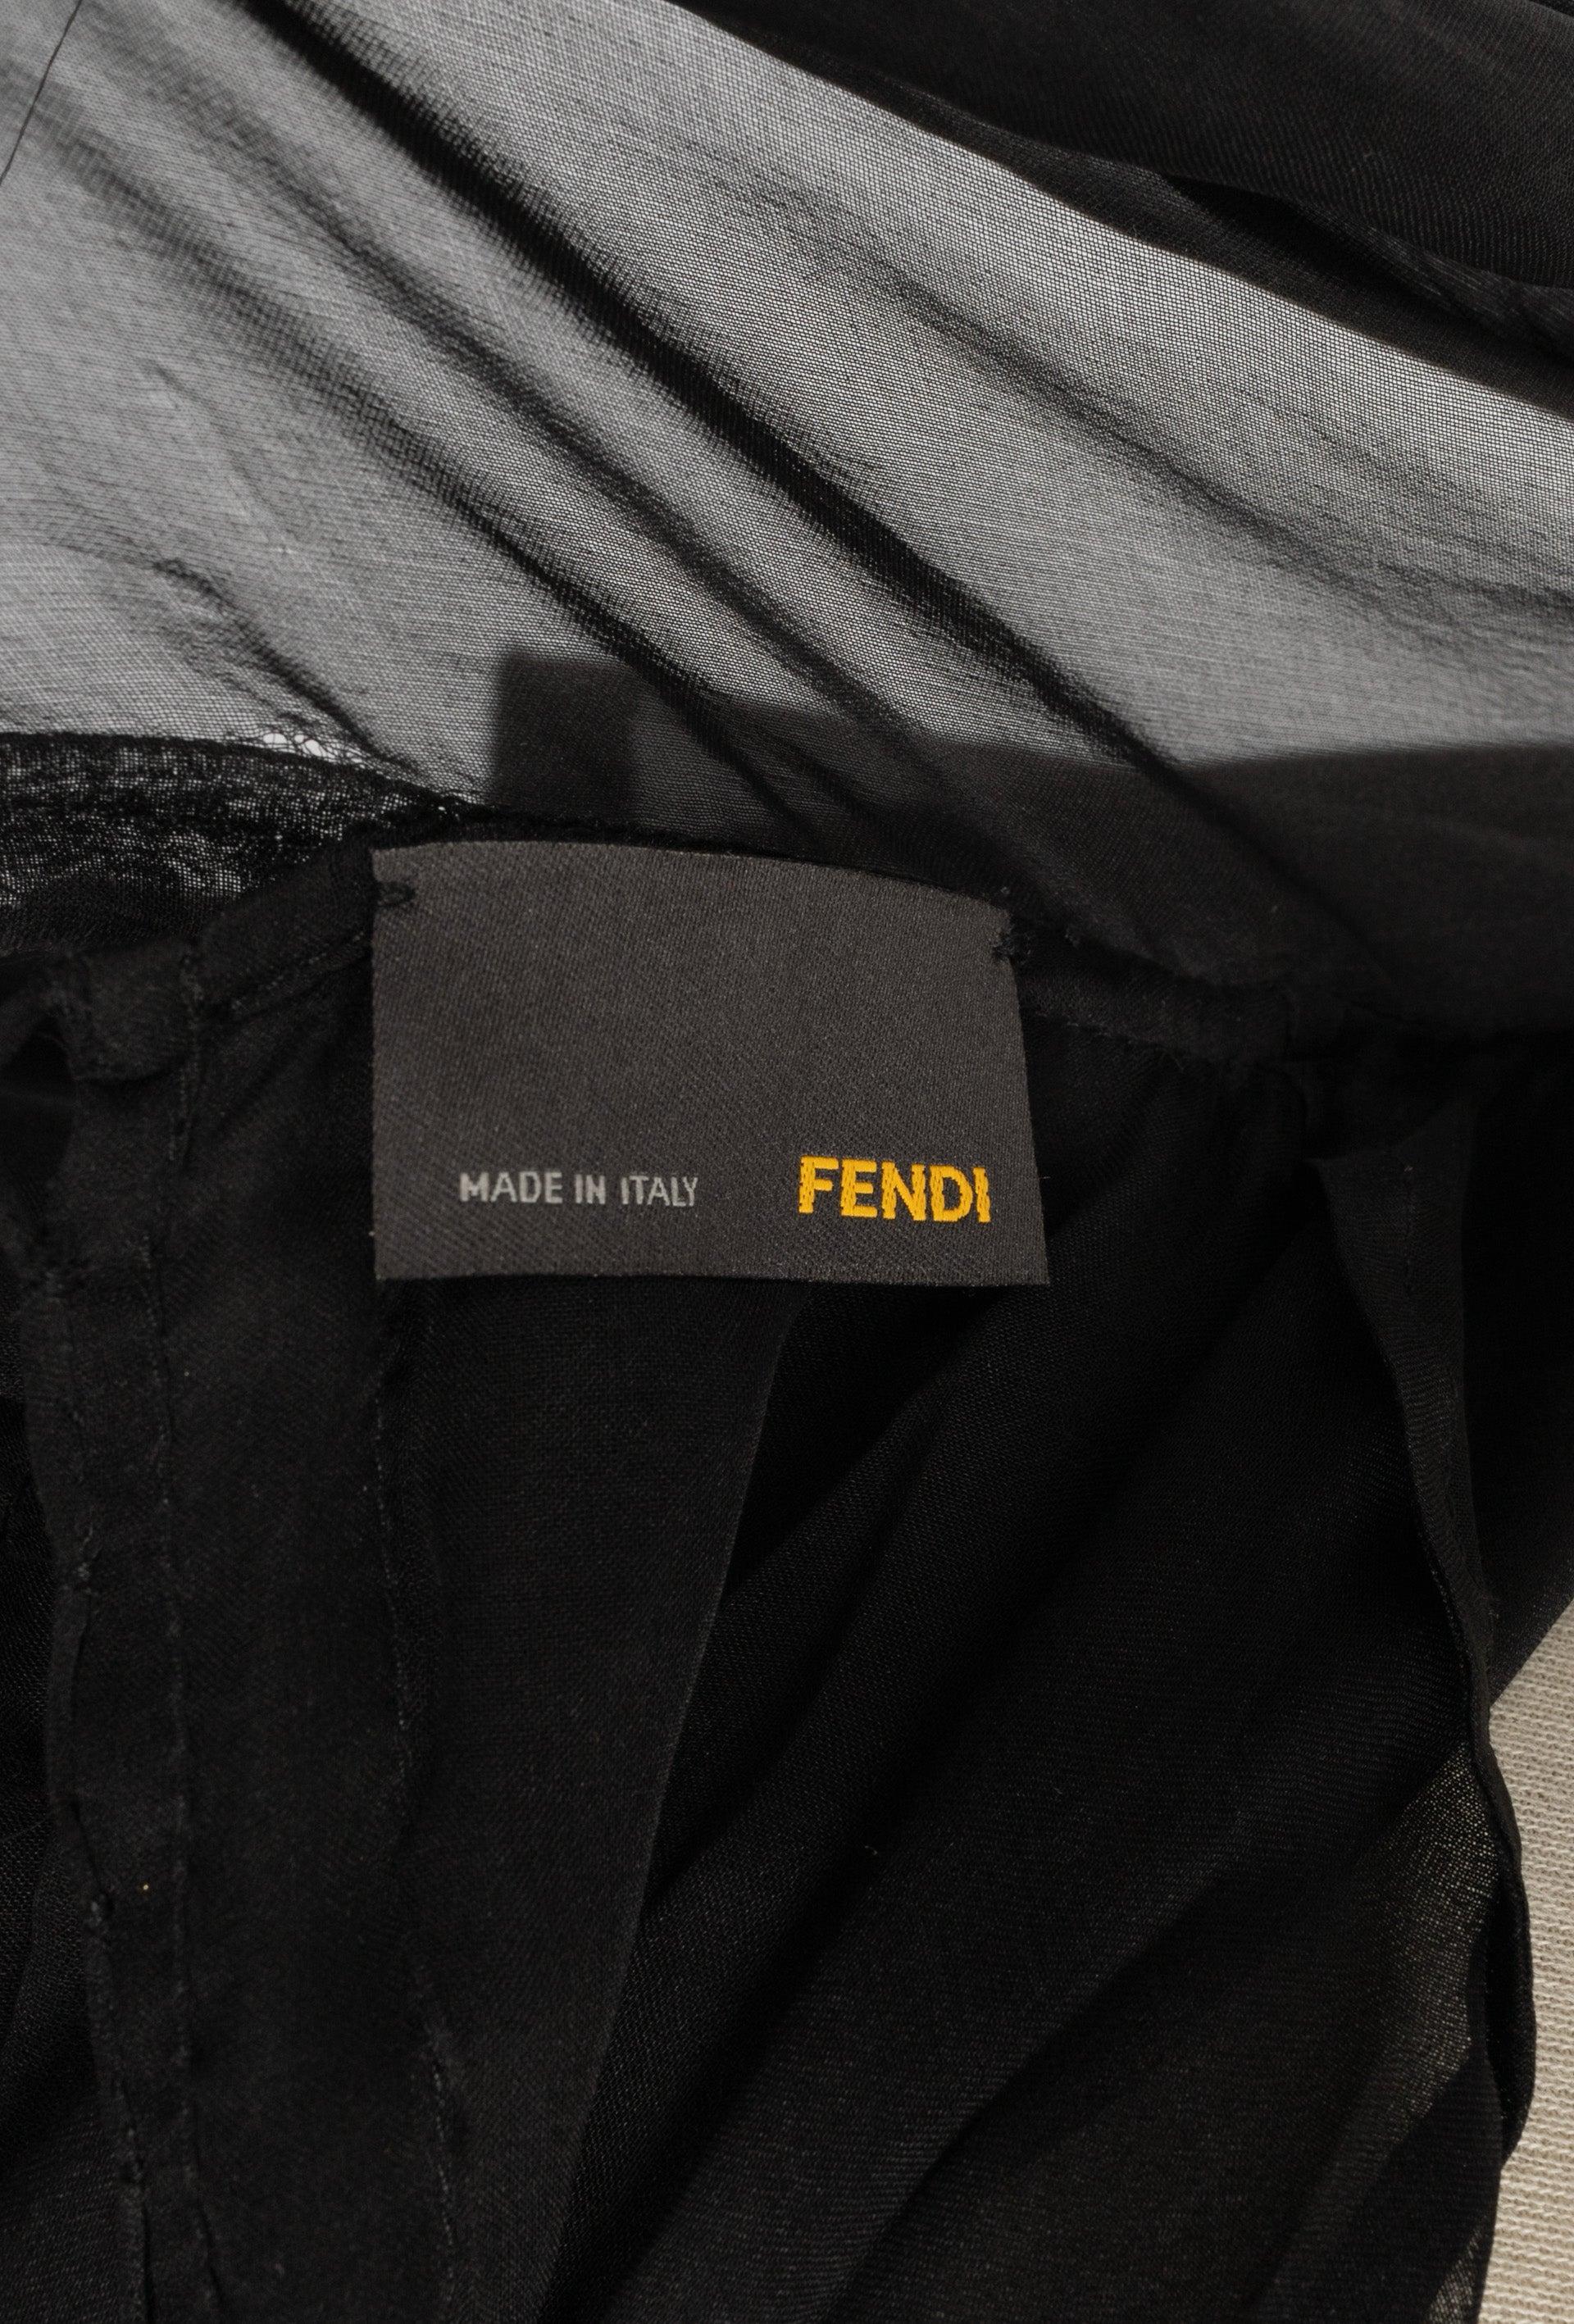 Fendi Black Silk Transparent Blouse For Sale 5